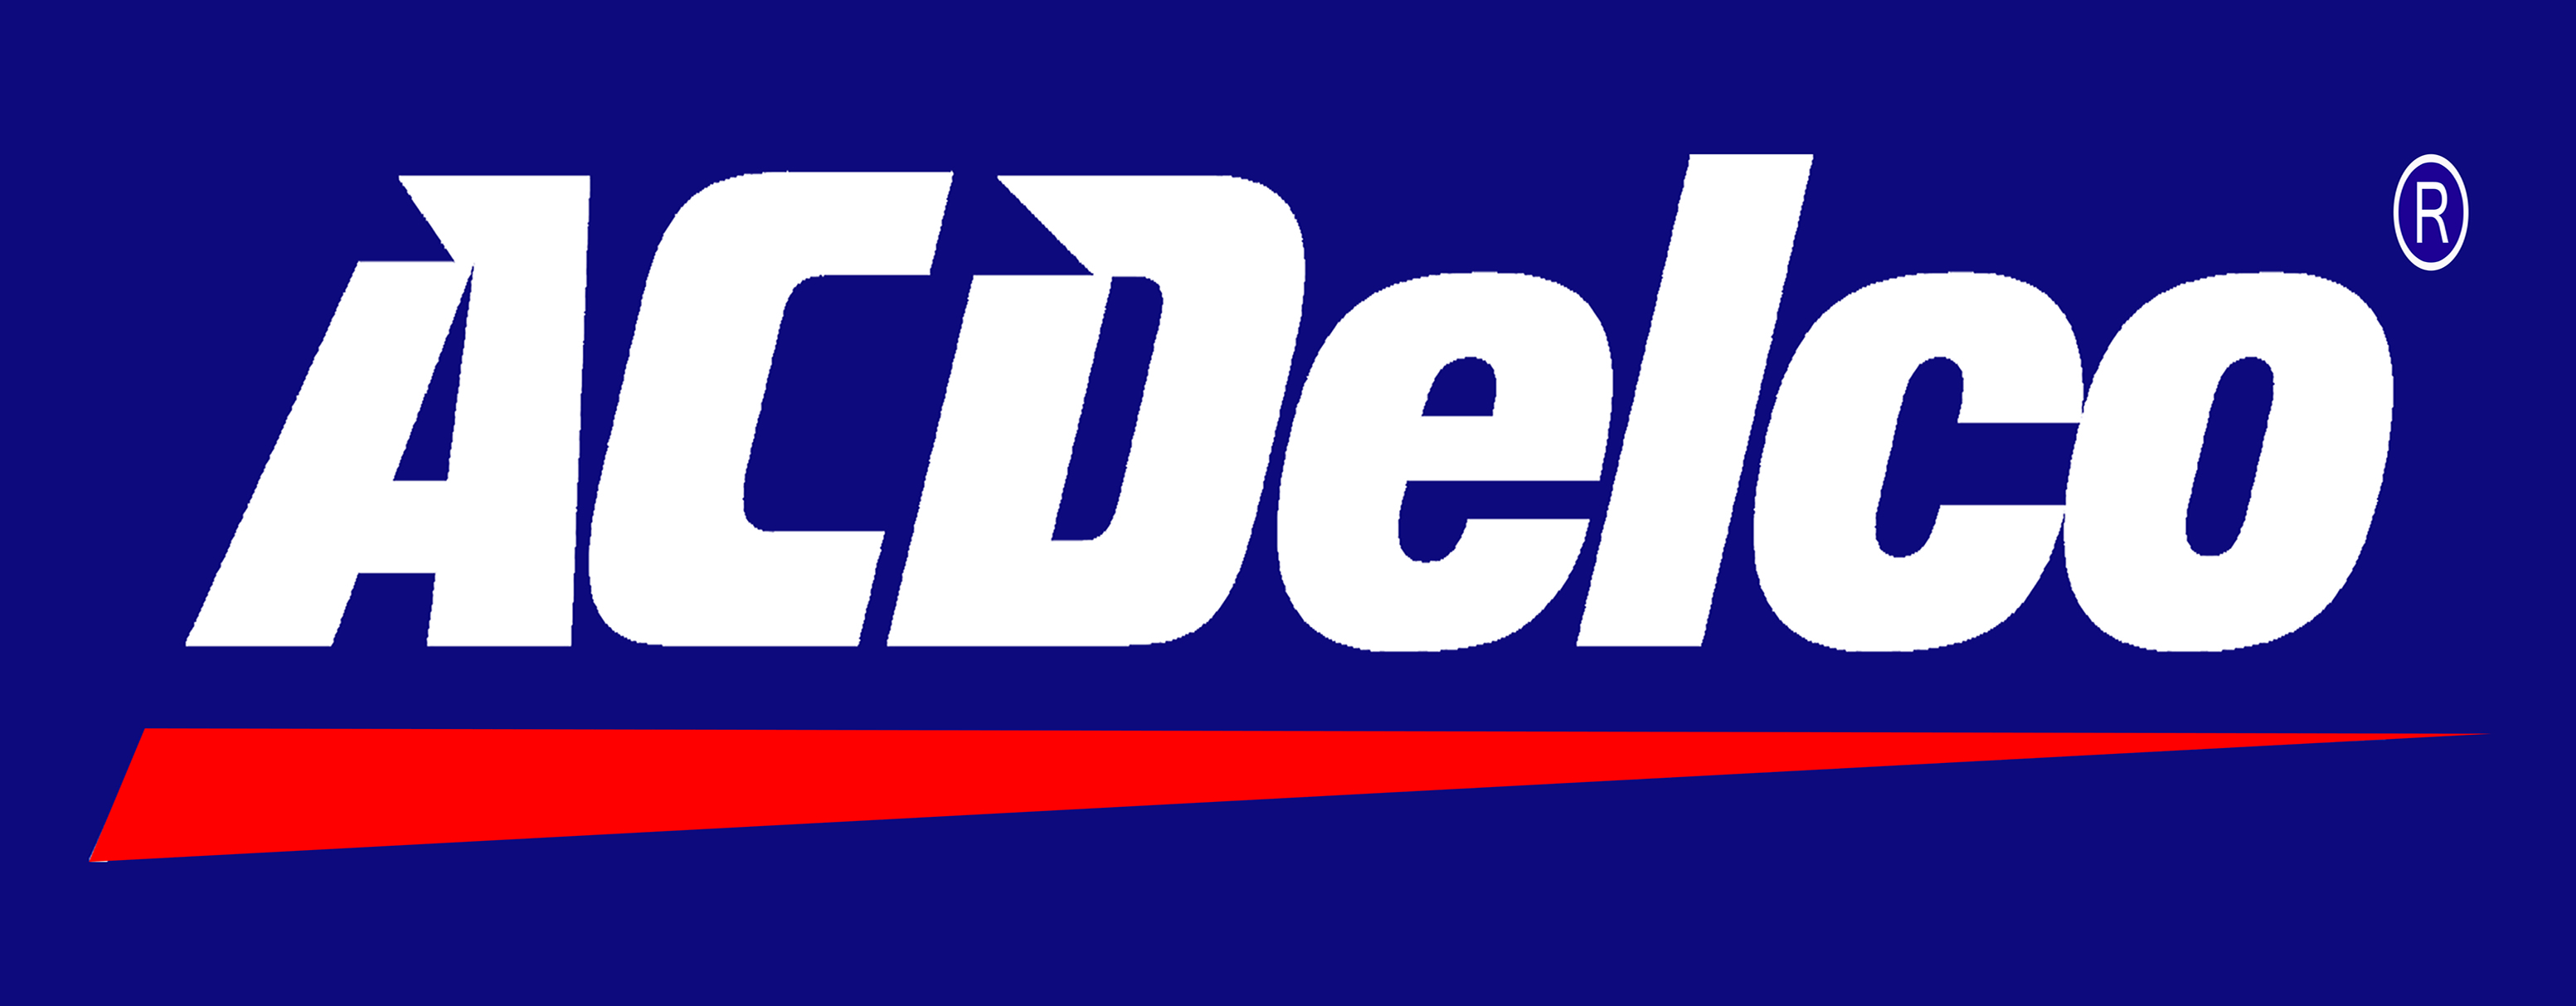 acdecta Logo photo - 1